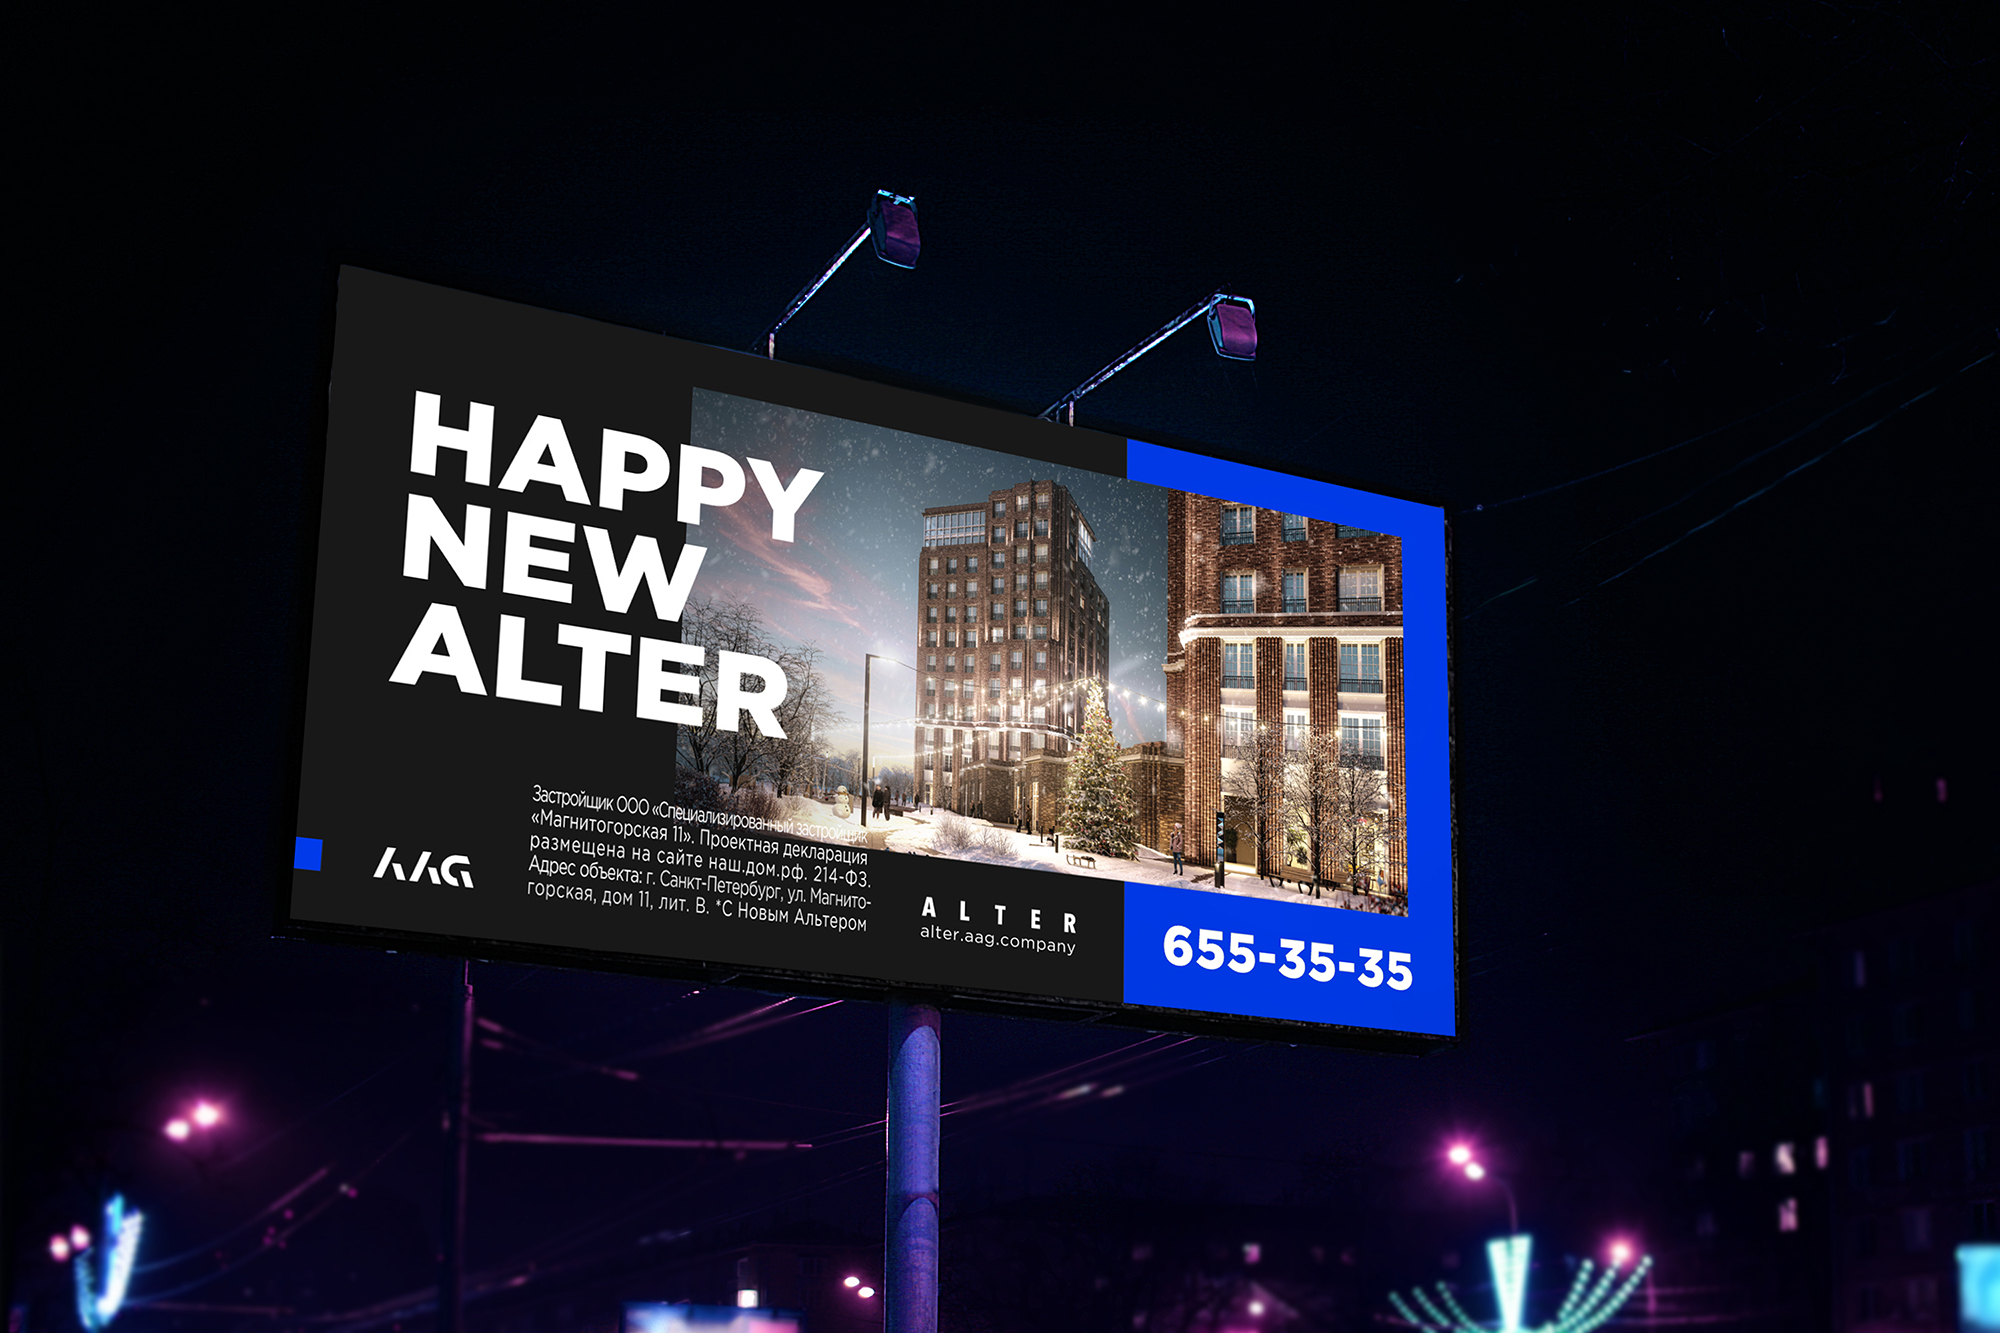 free_night_scene_advertisement_billboard_mockup_2018.jpg